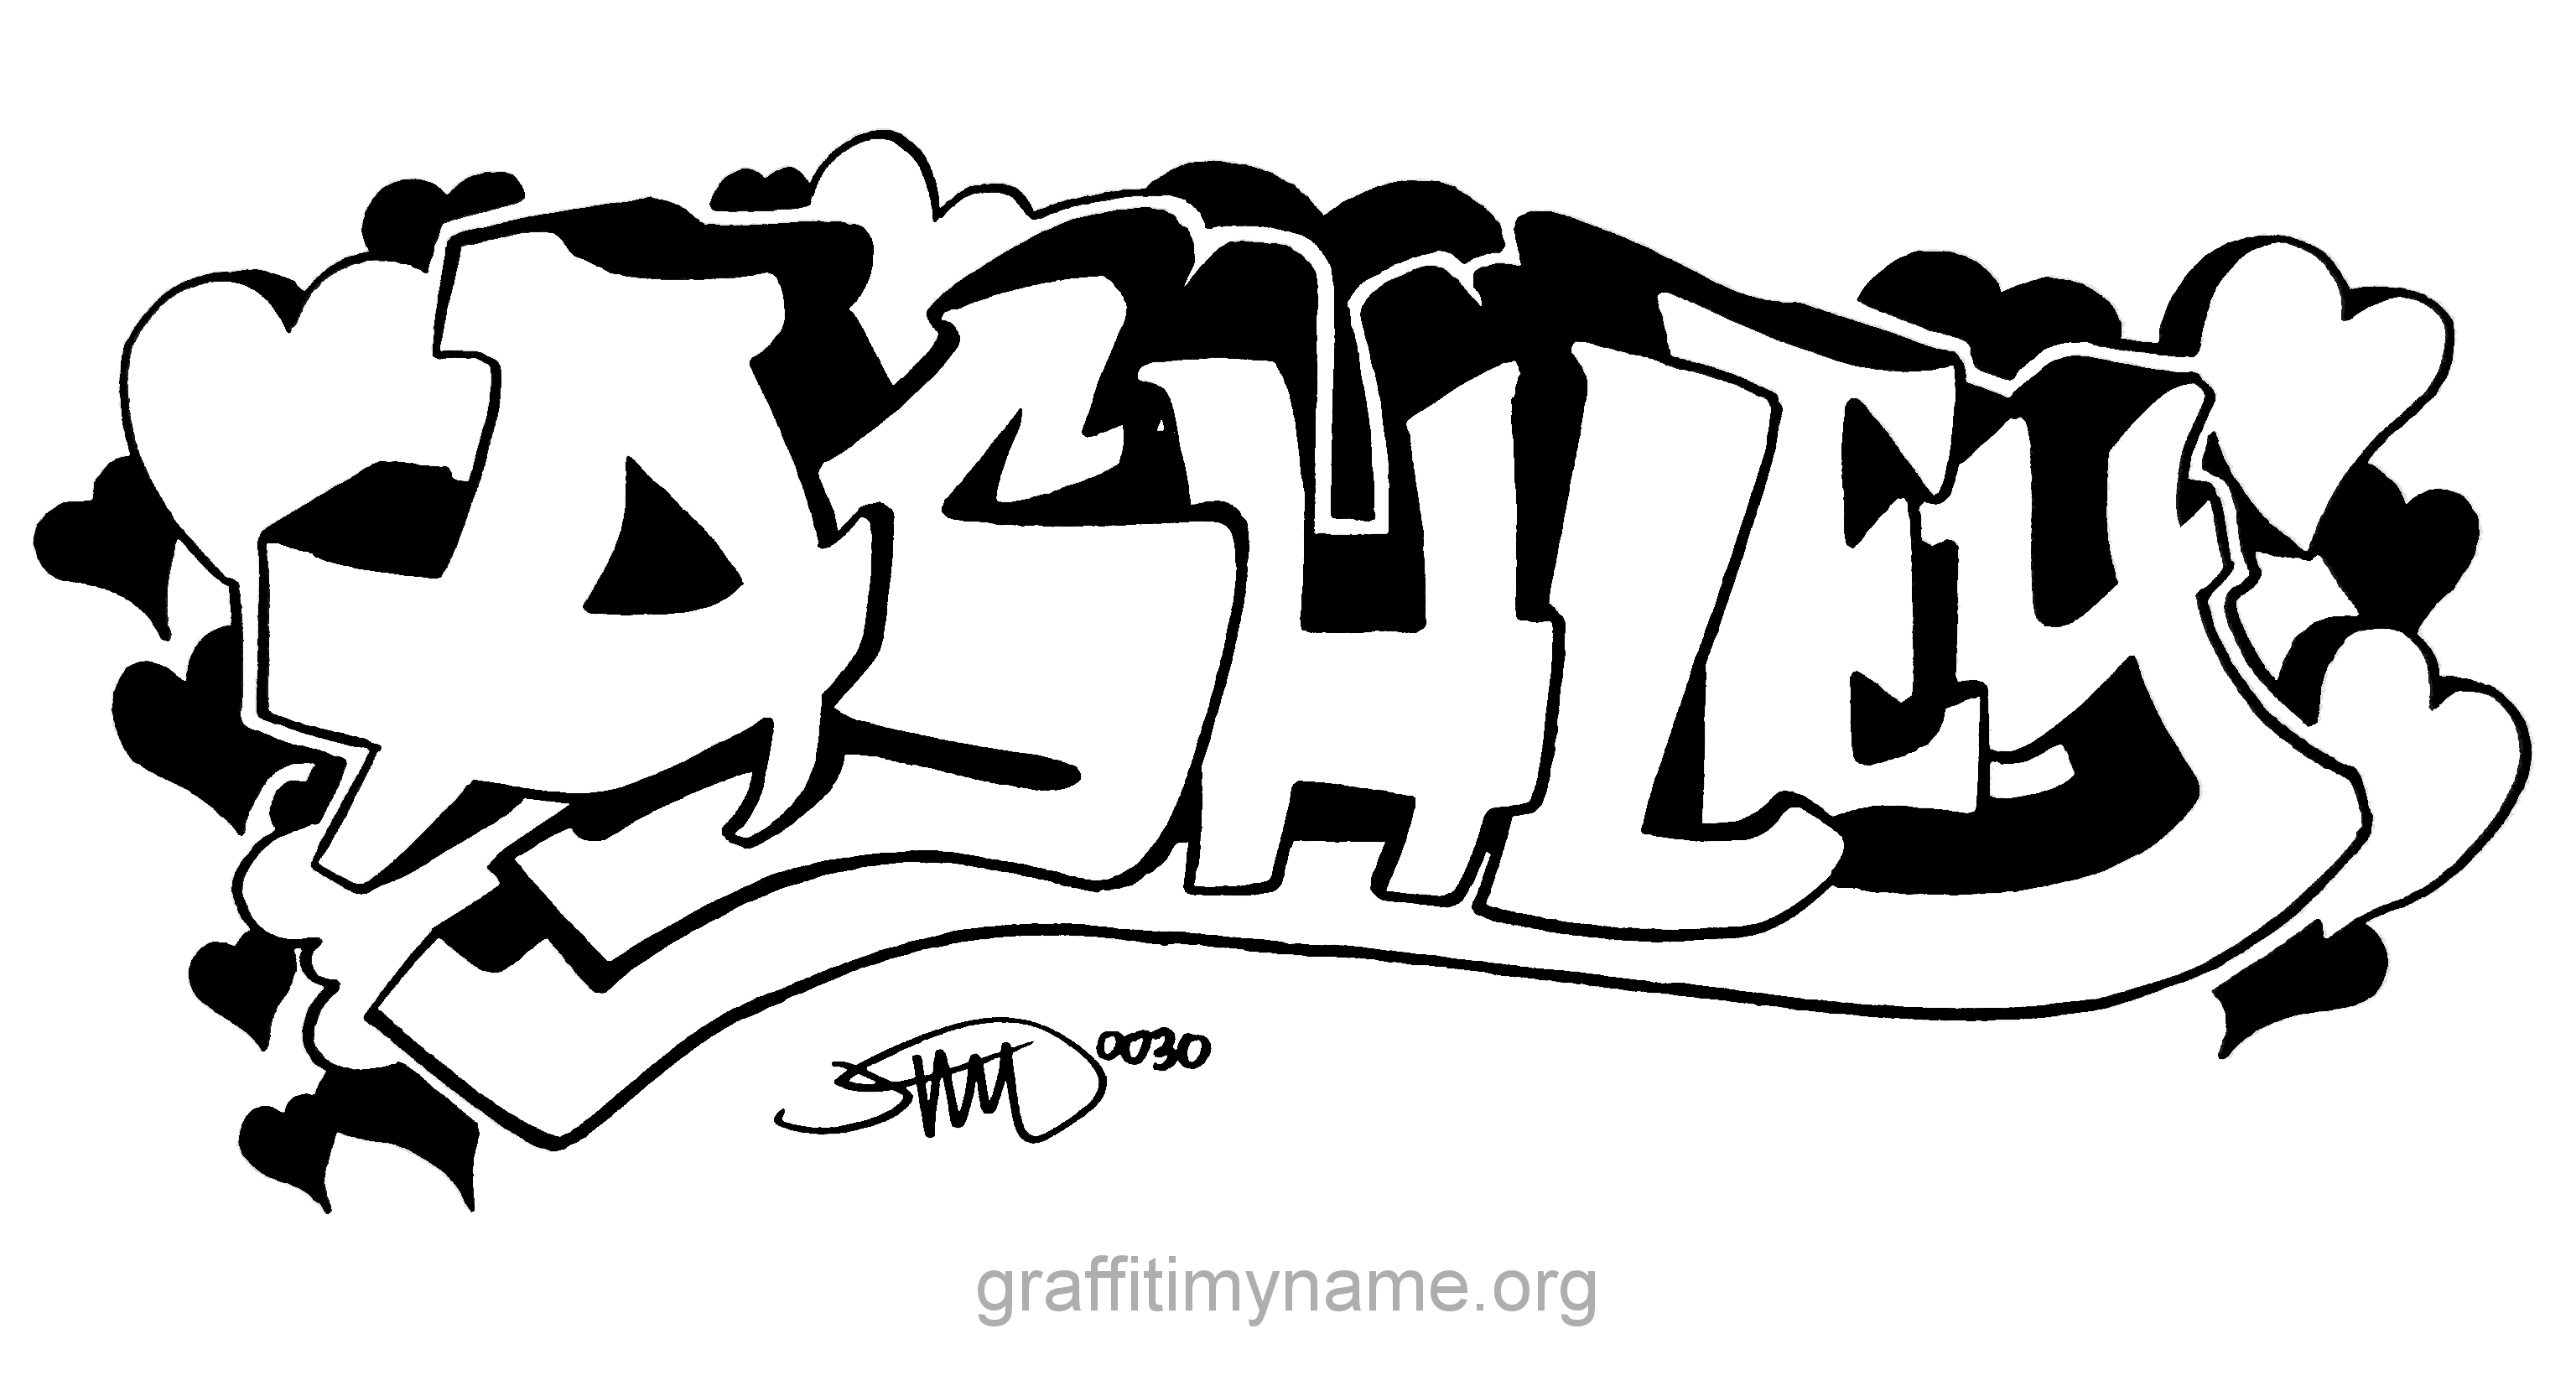 Трафареты для граффити